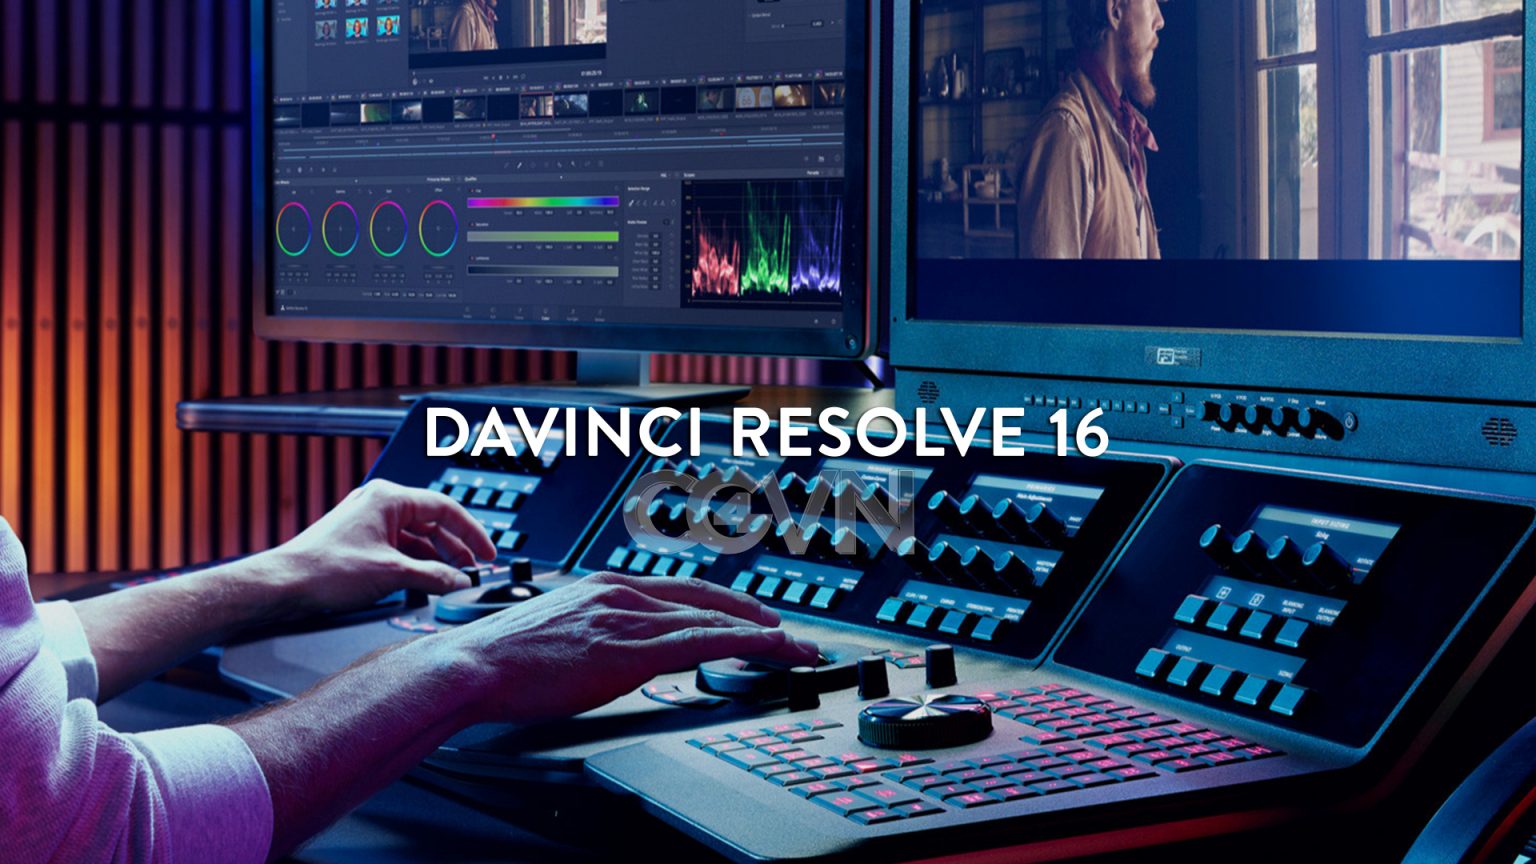 activation key for davinci resolve studio 16